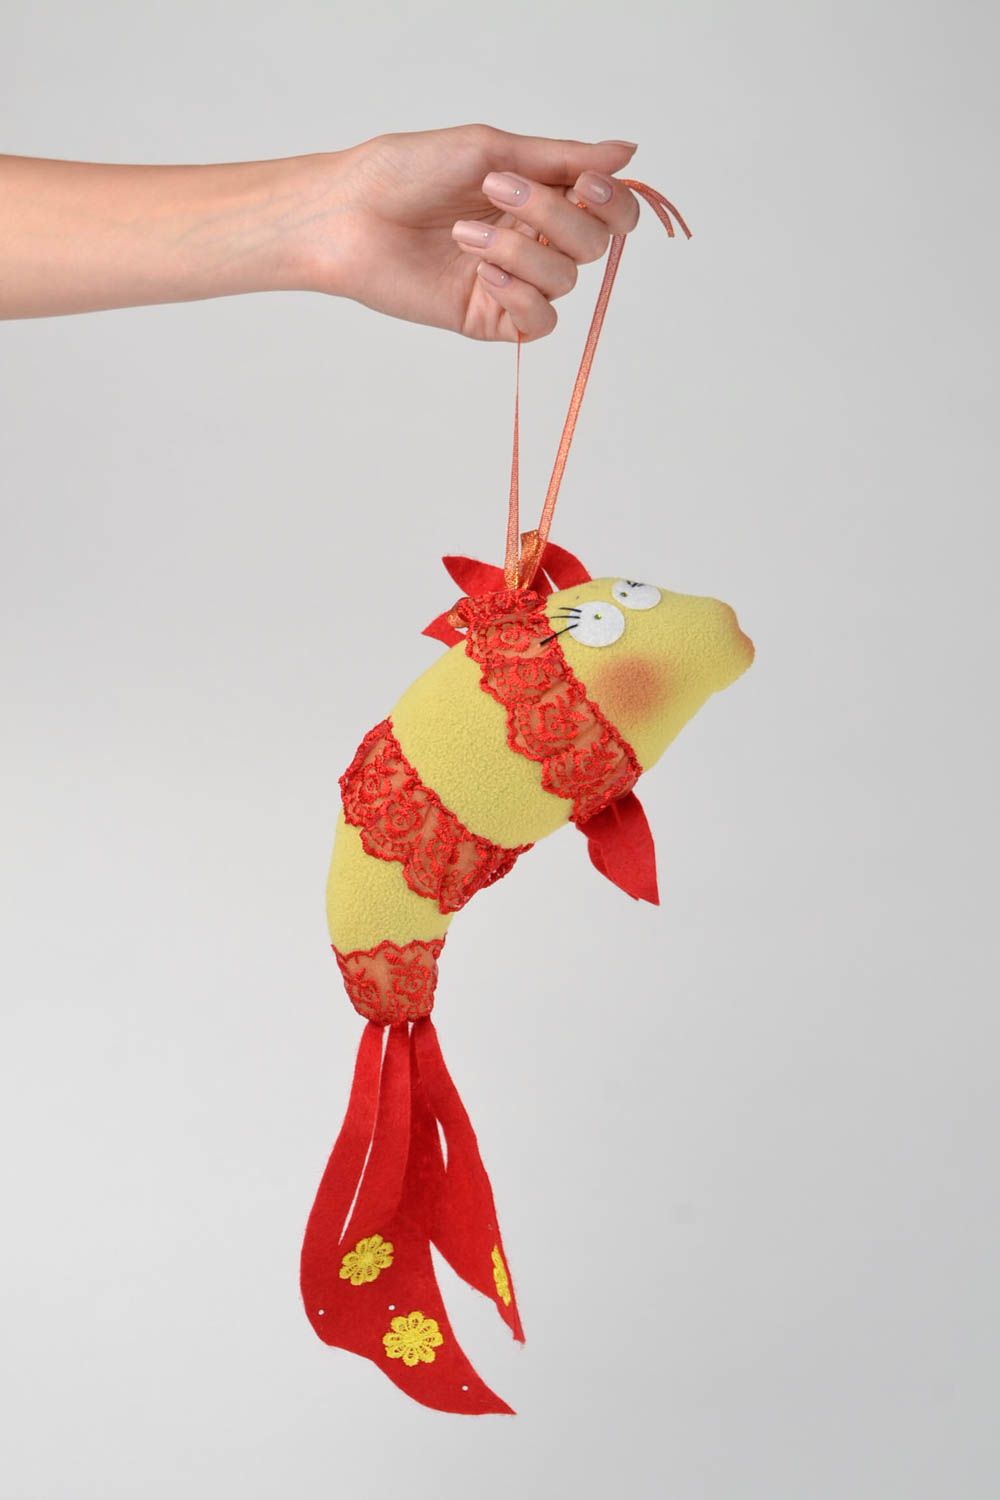 Handmade toy fish toy unusual toy nursery decor gift for baby decor ideas photo 2